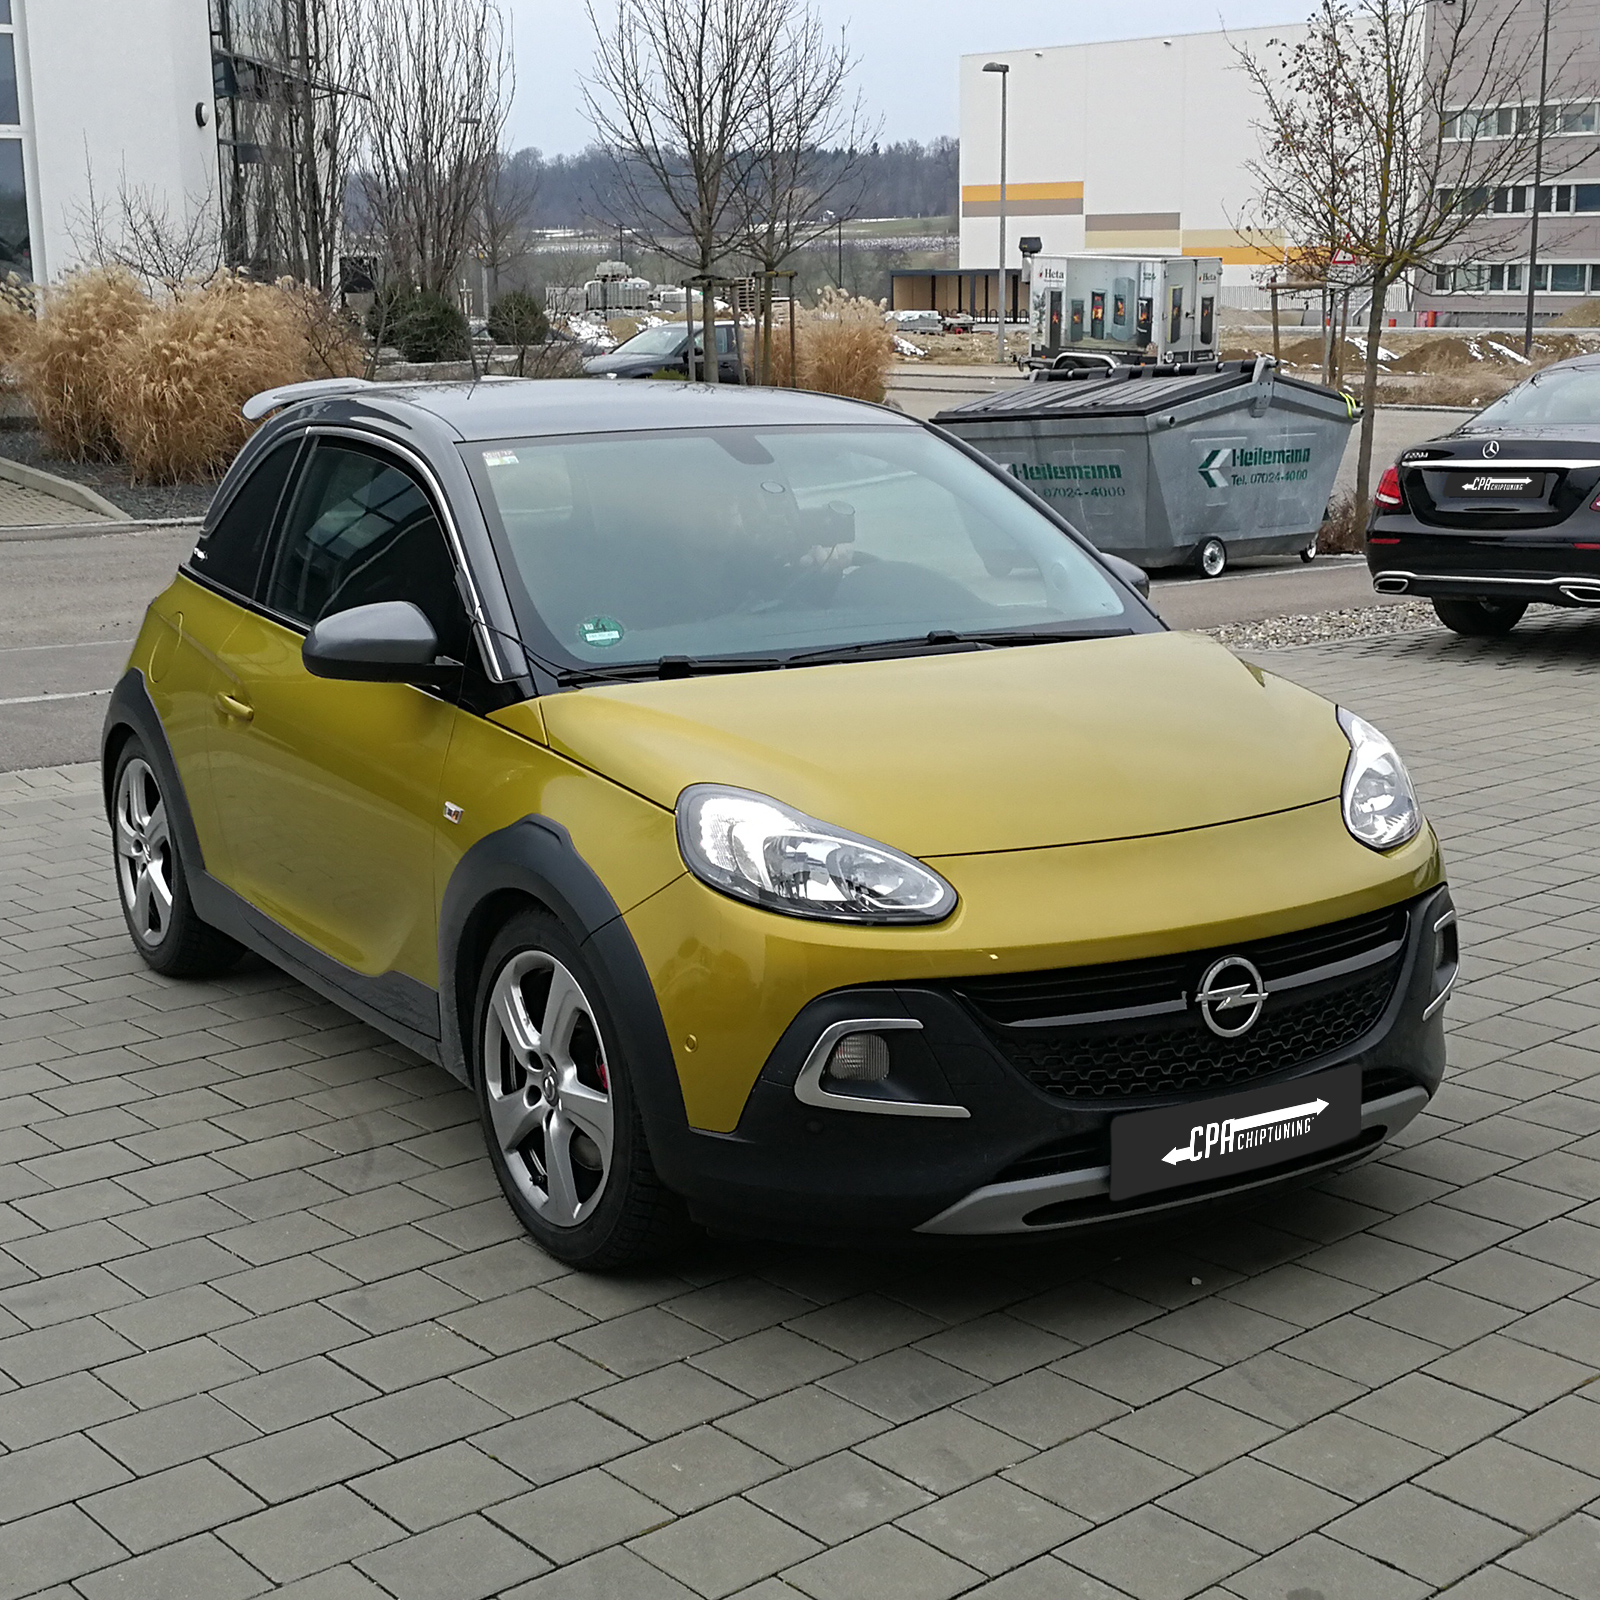 Lille Opel med stor kraft